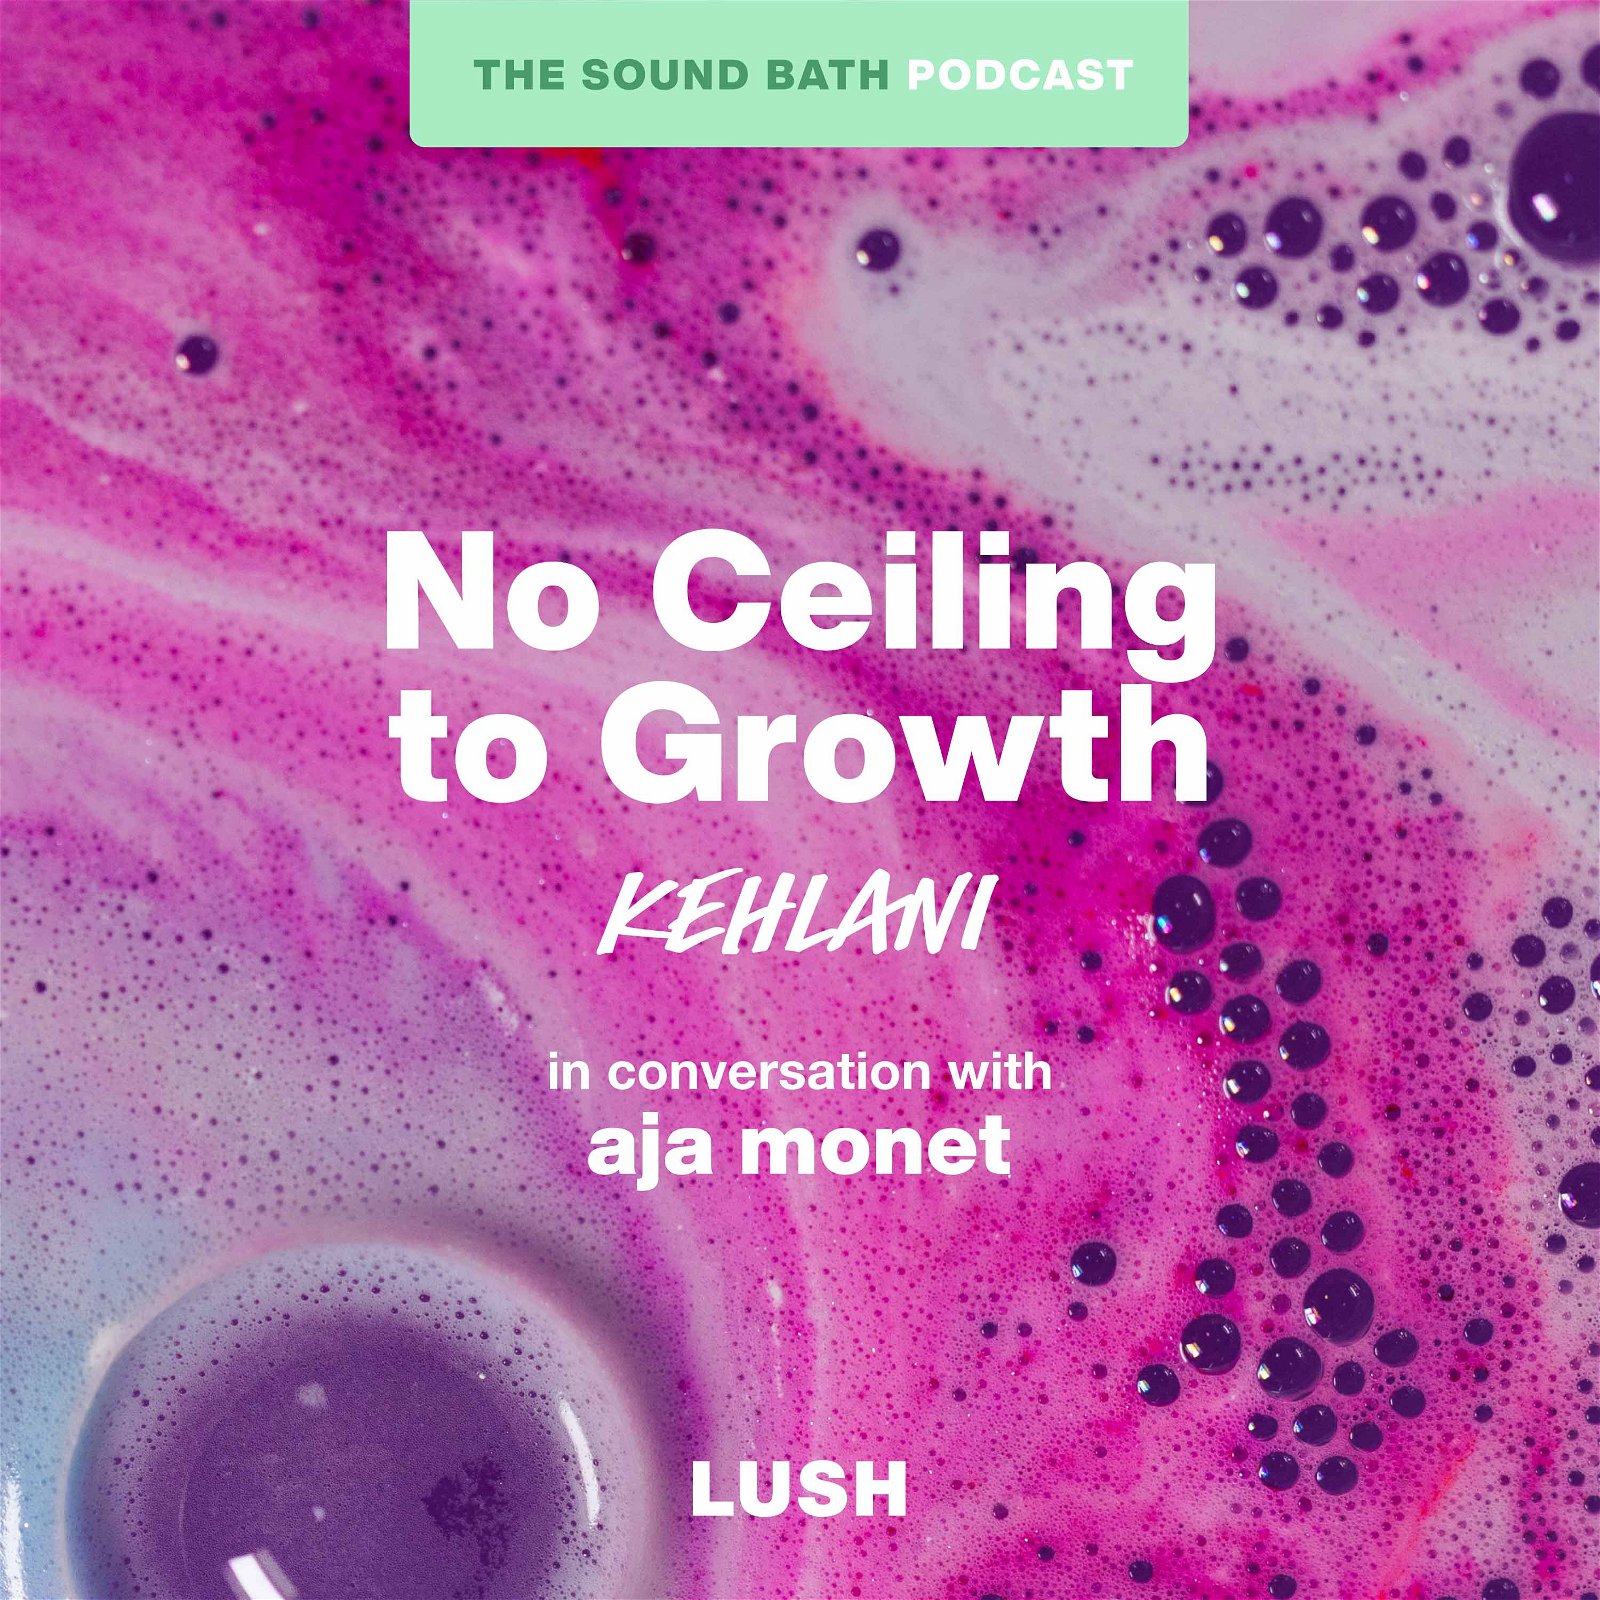 Kehlani - No Ceiling to Growth